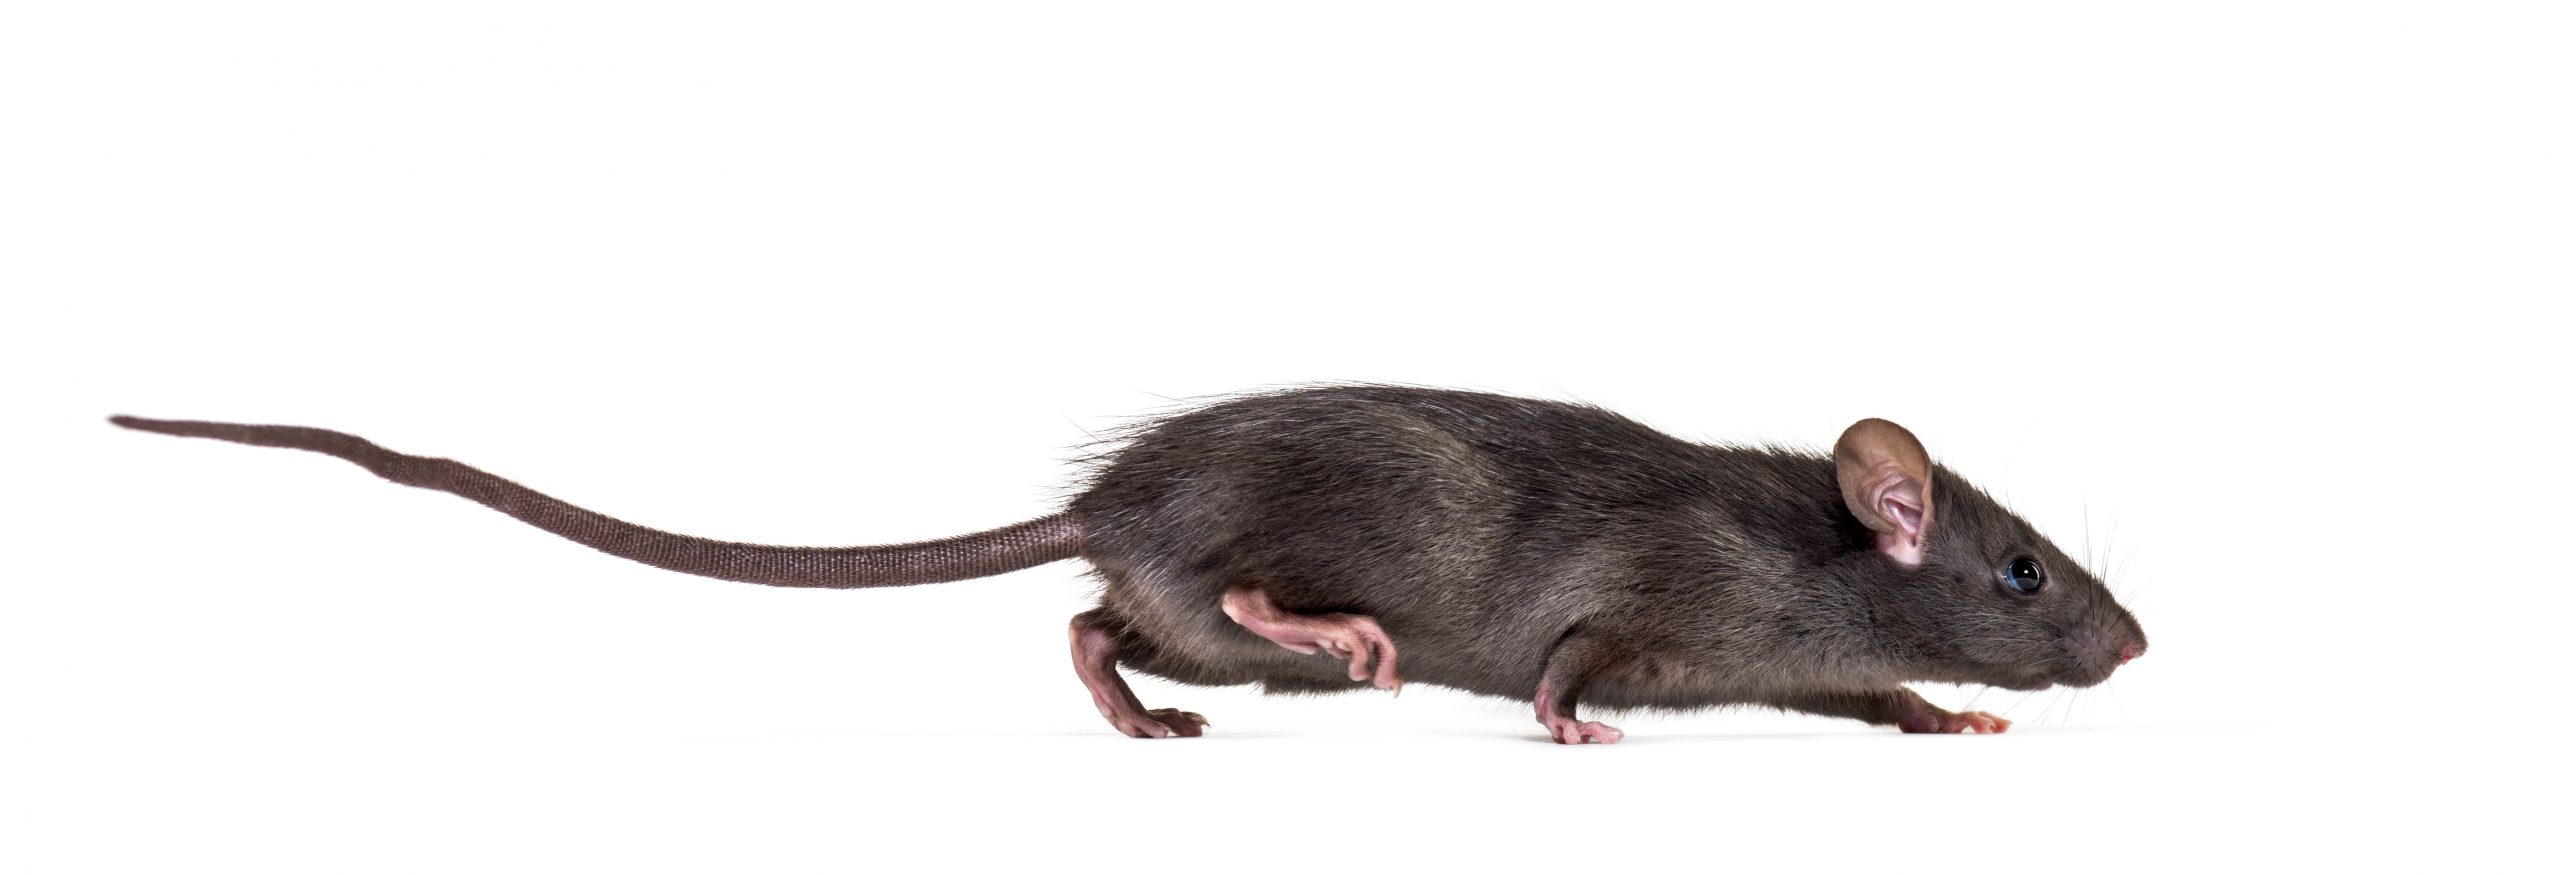 Deductibility of COVID-19 RAT Tests